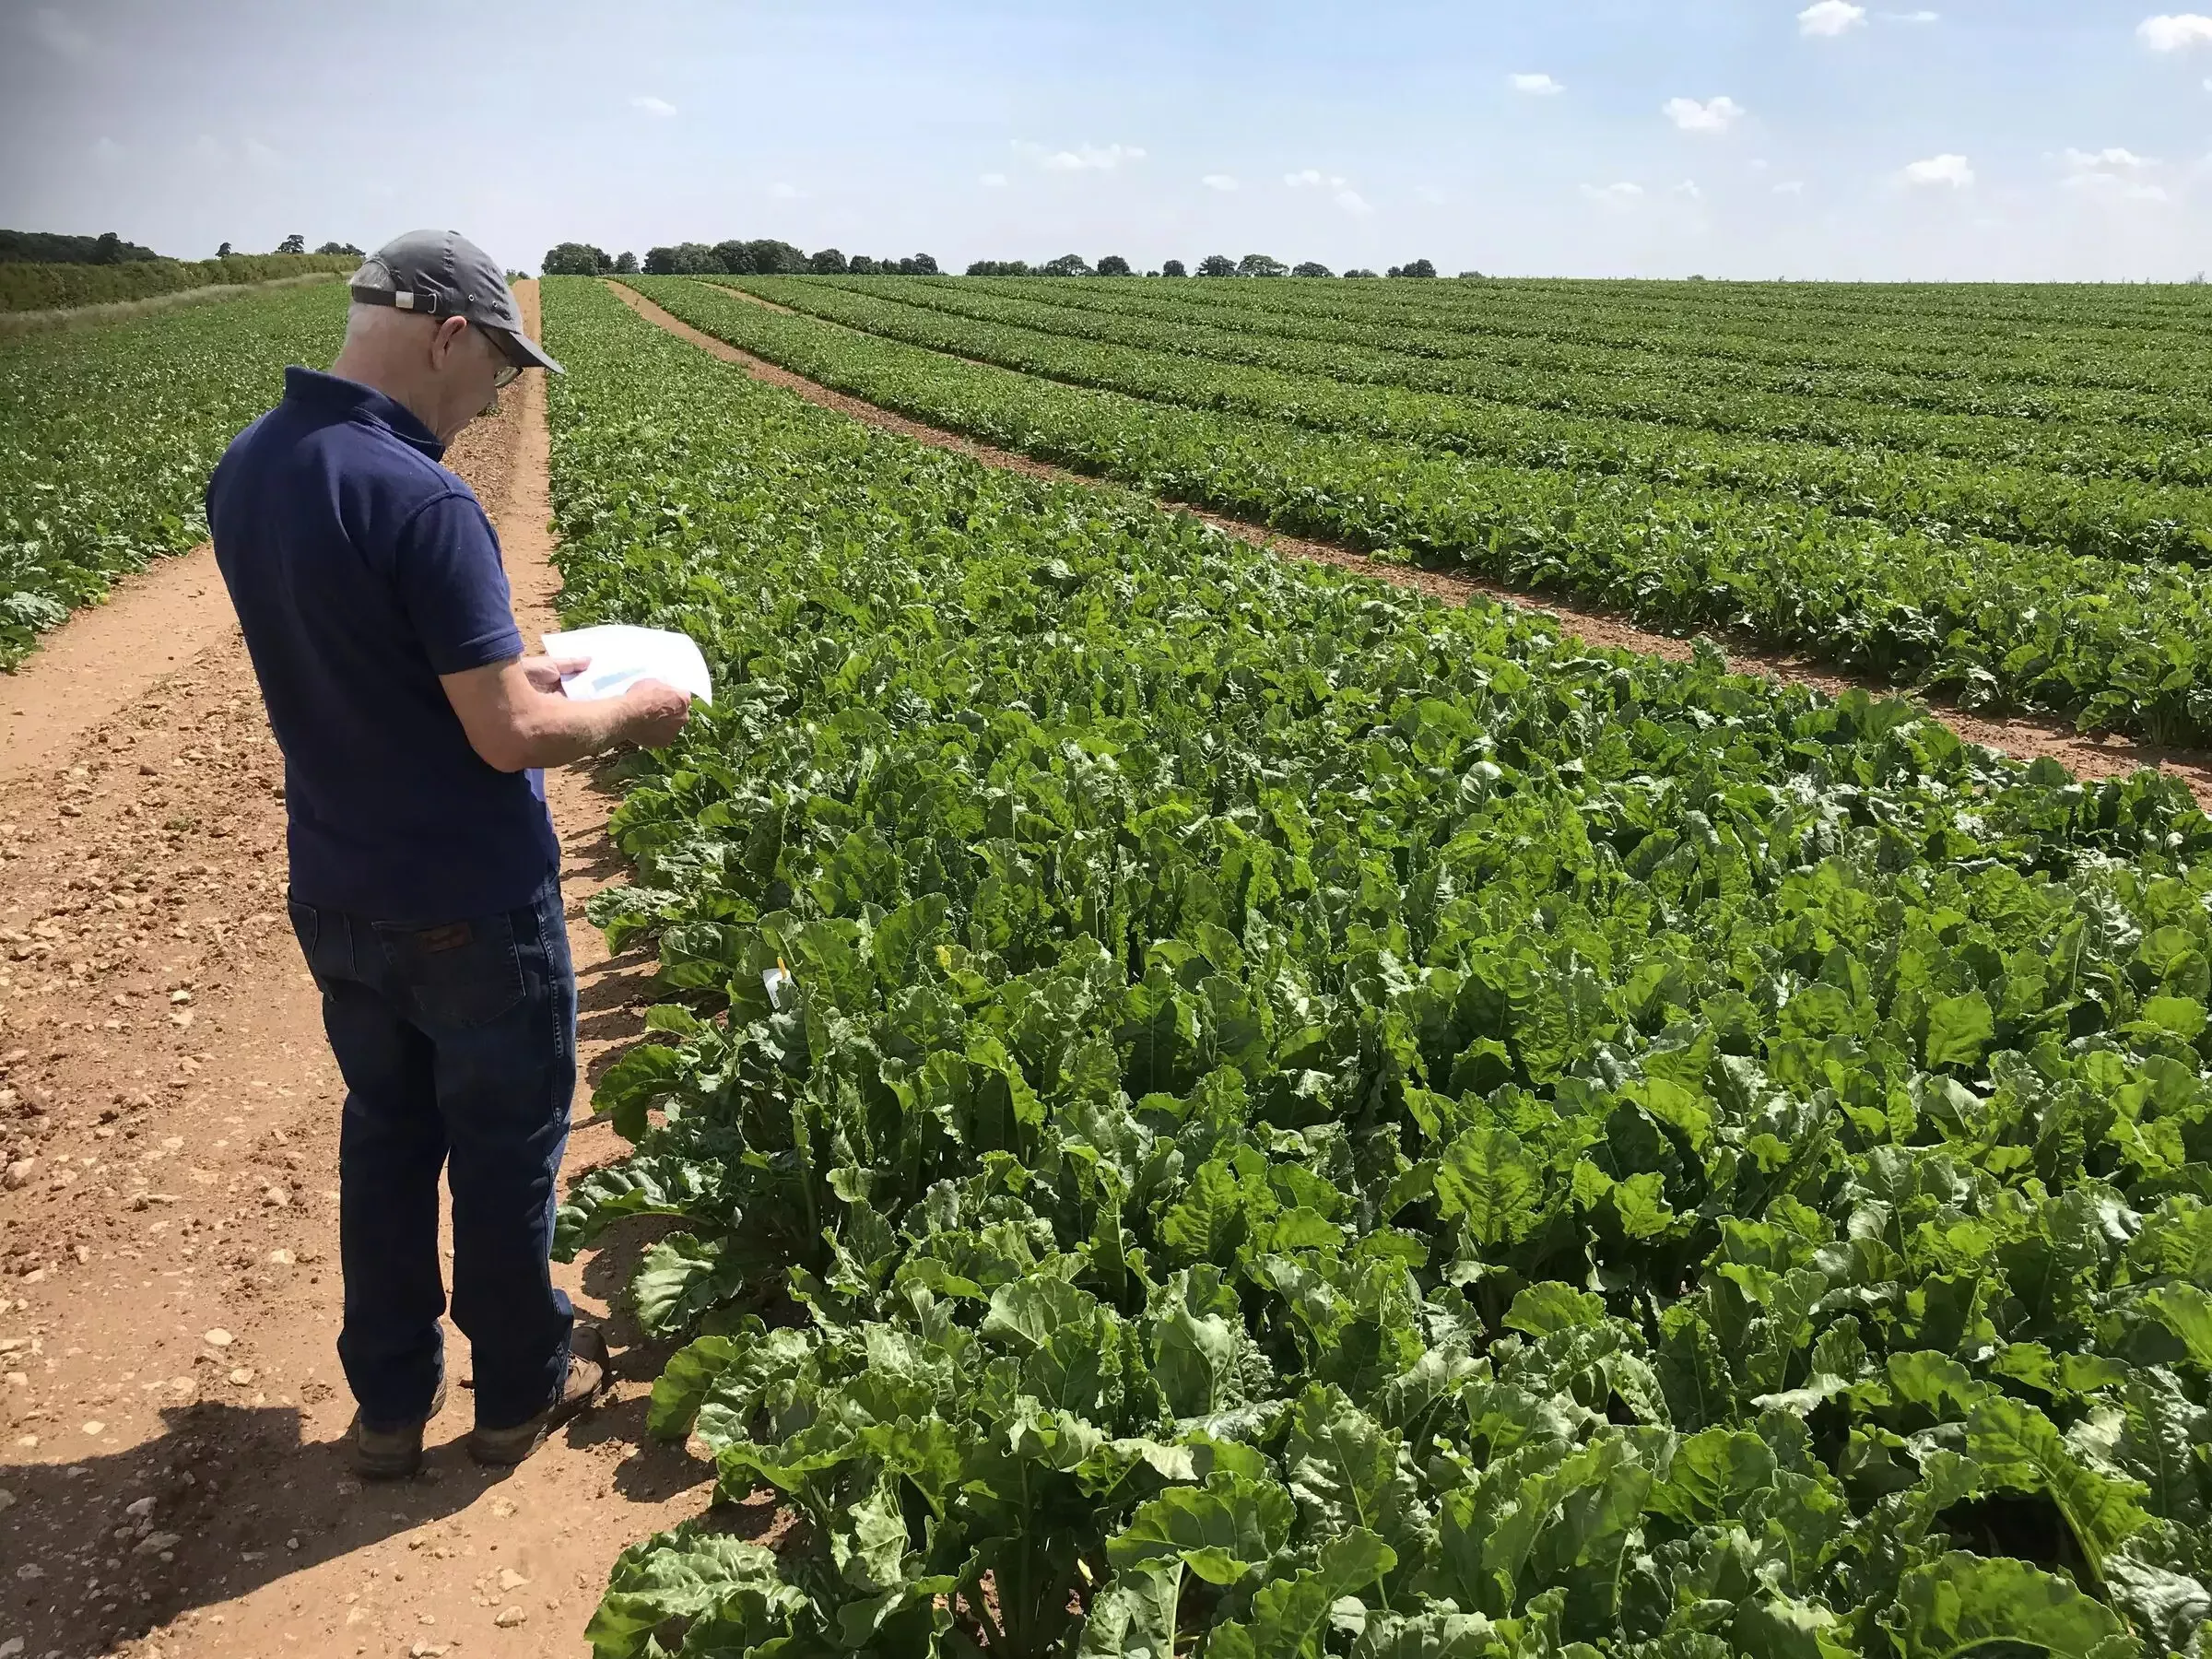 Sesvanderhave sugar beet seed sugar beet plants employee on the field assessment